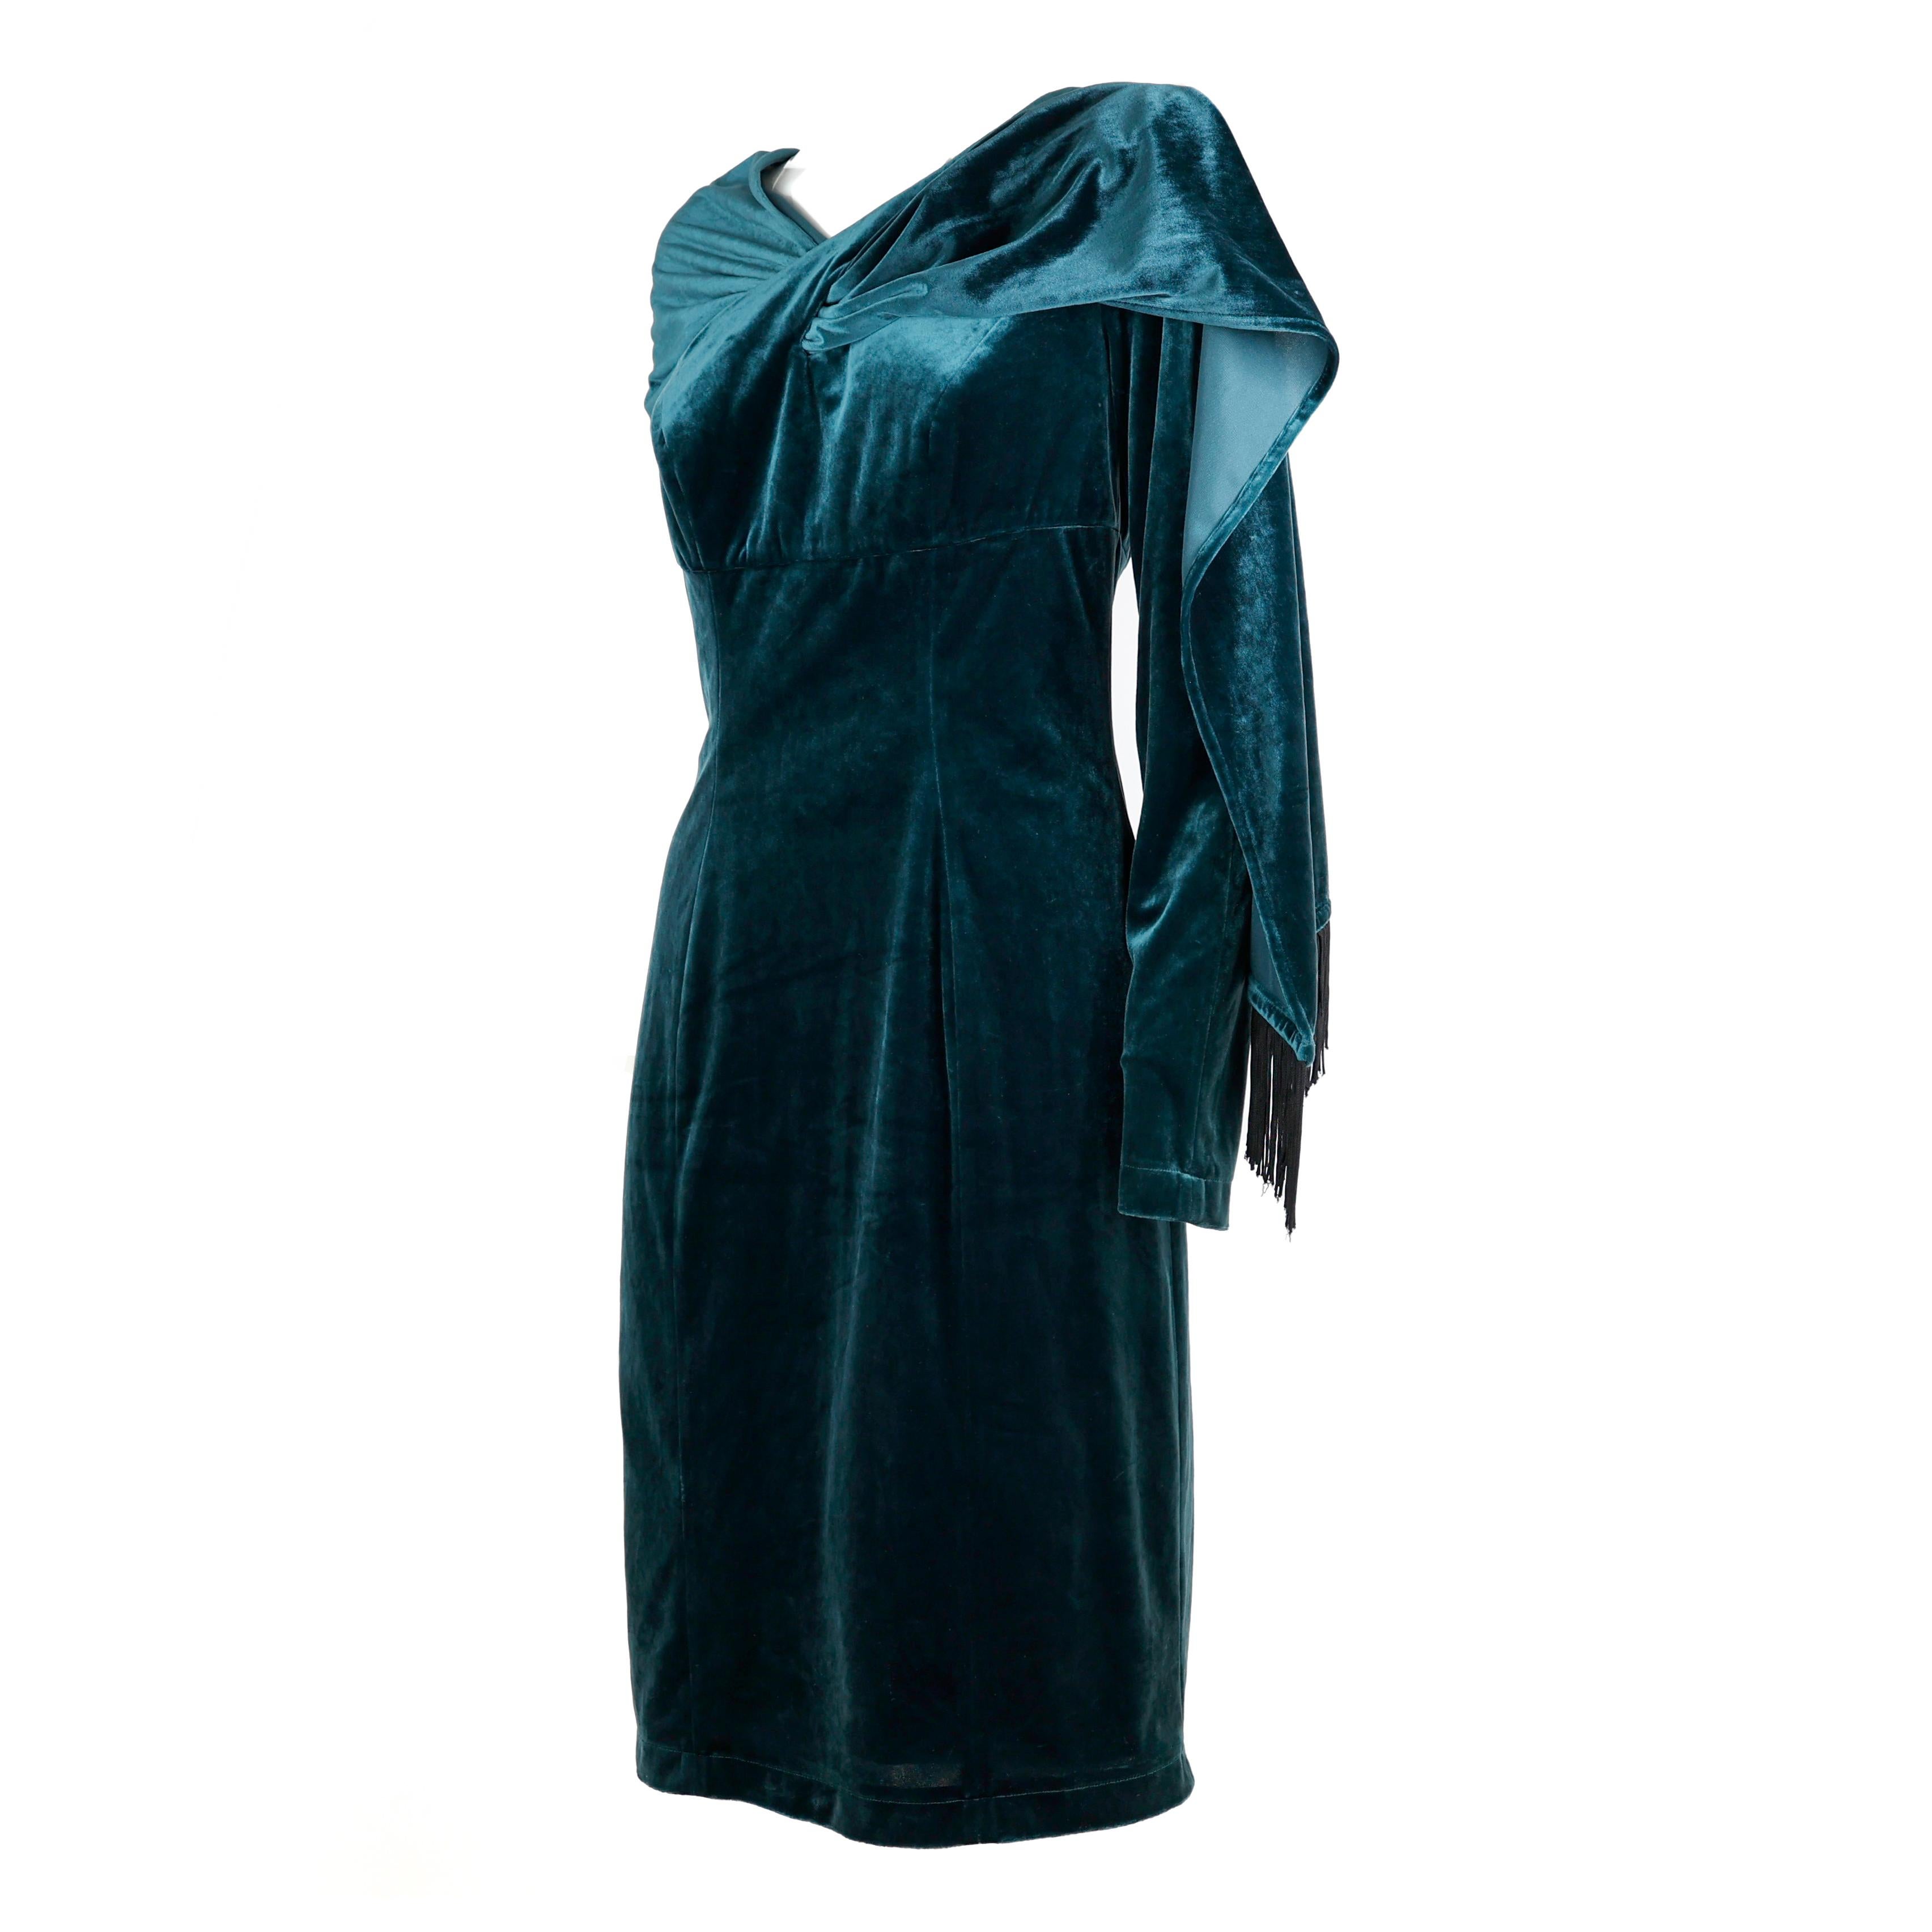 Mugler Velvet Dress In Excellent Condition For Sale In Bressanone, IT